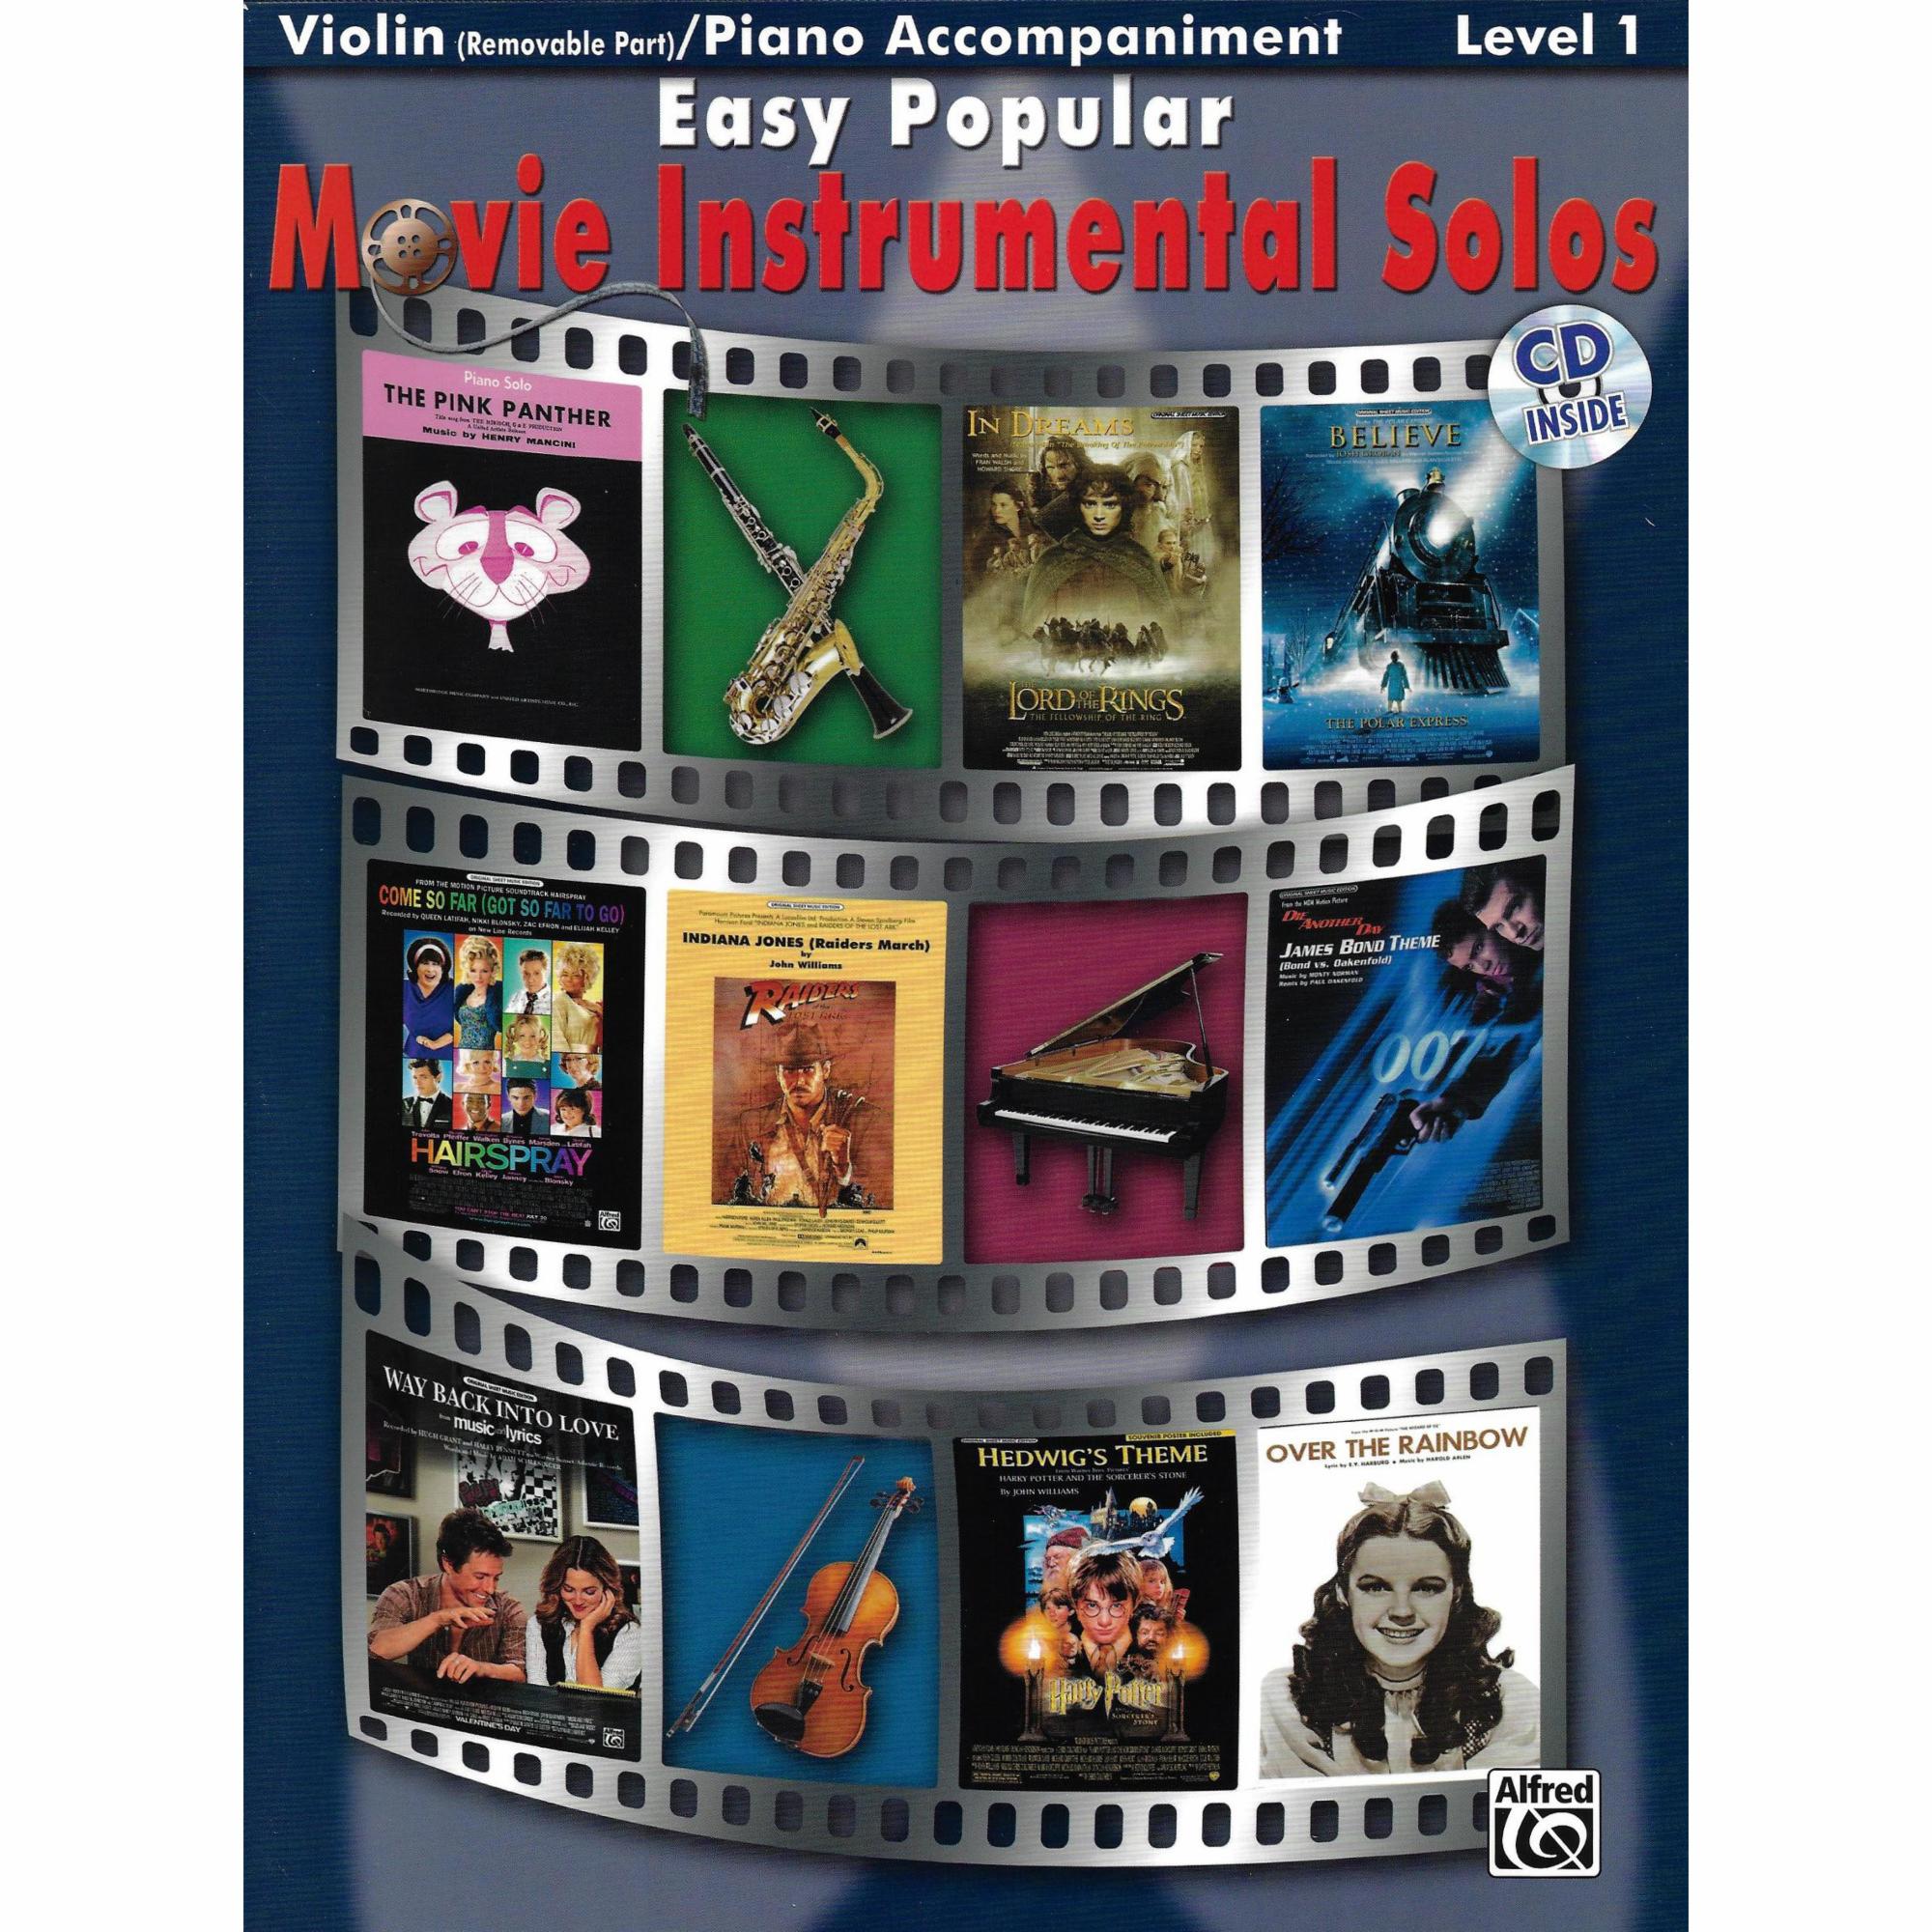 Easy Popular Movie Solos for Violin, Viola, or Cello and Piano